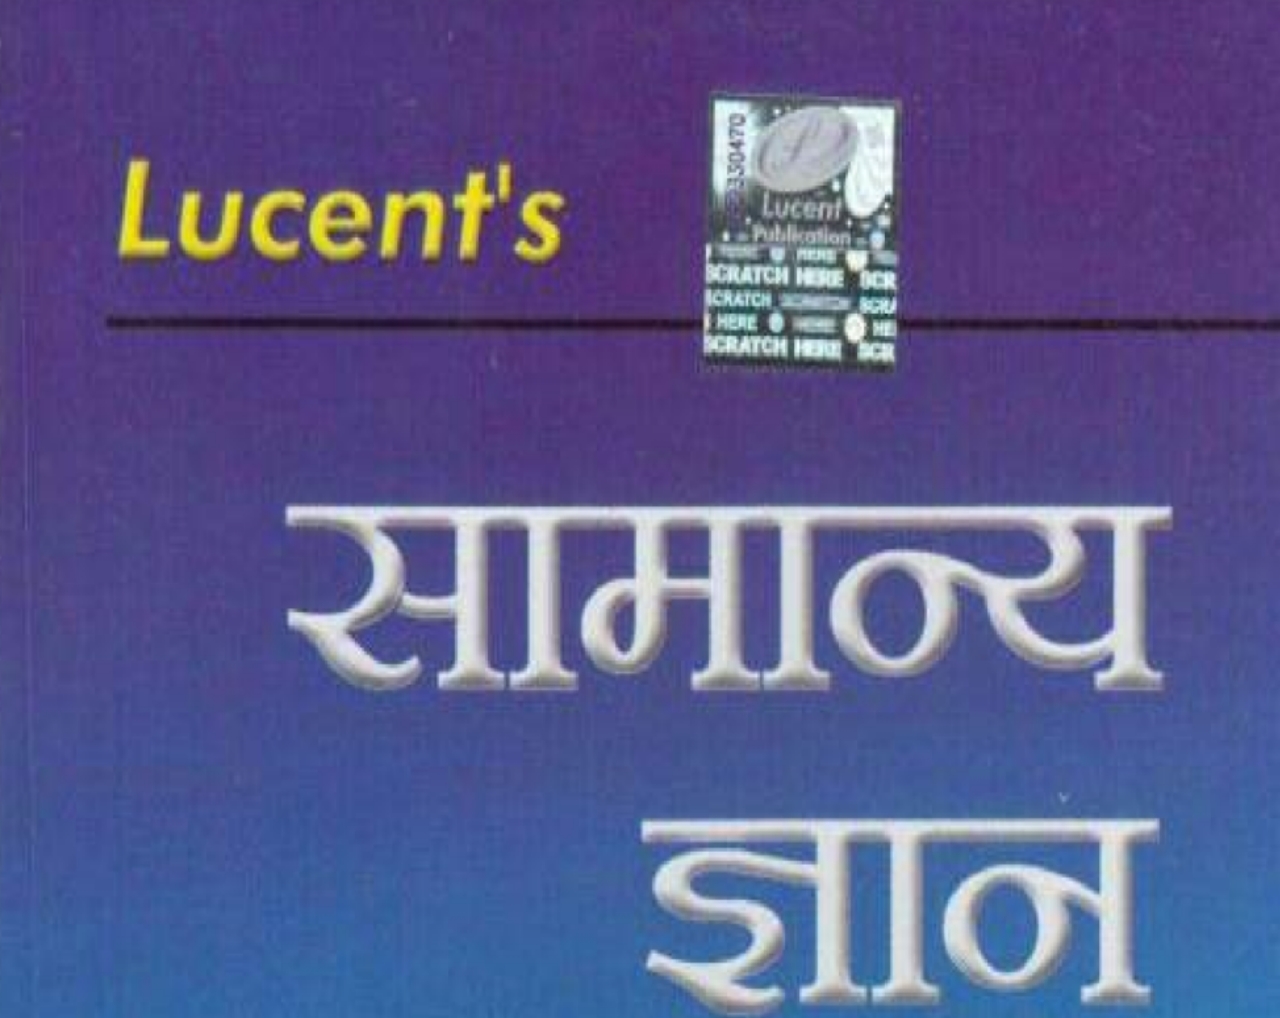 lucent gk pdf free download